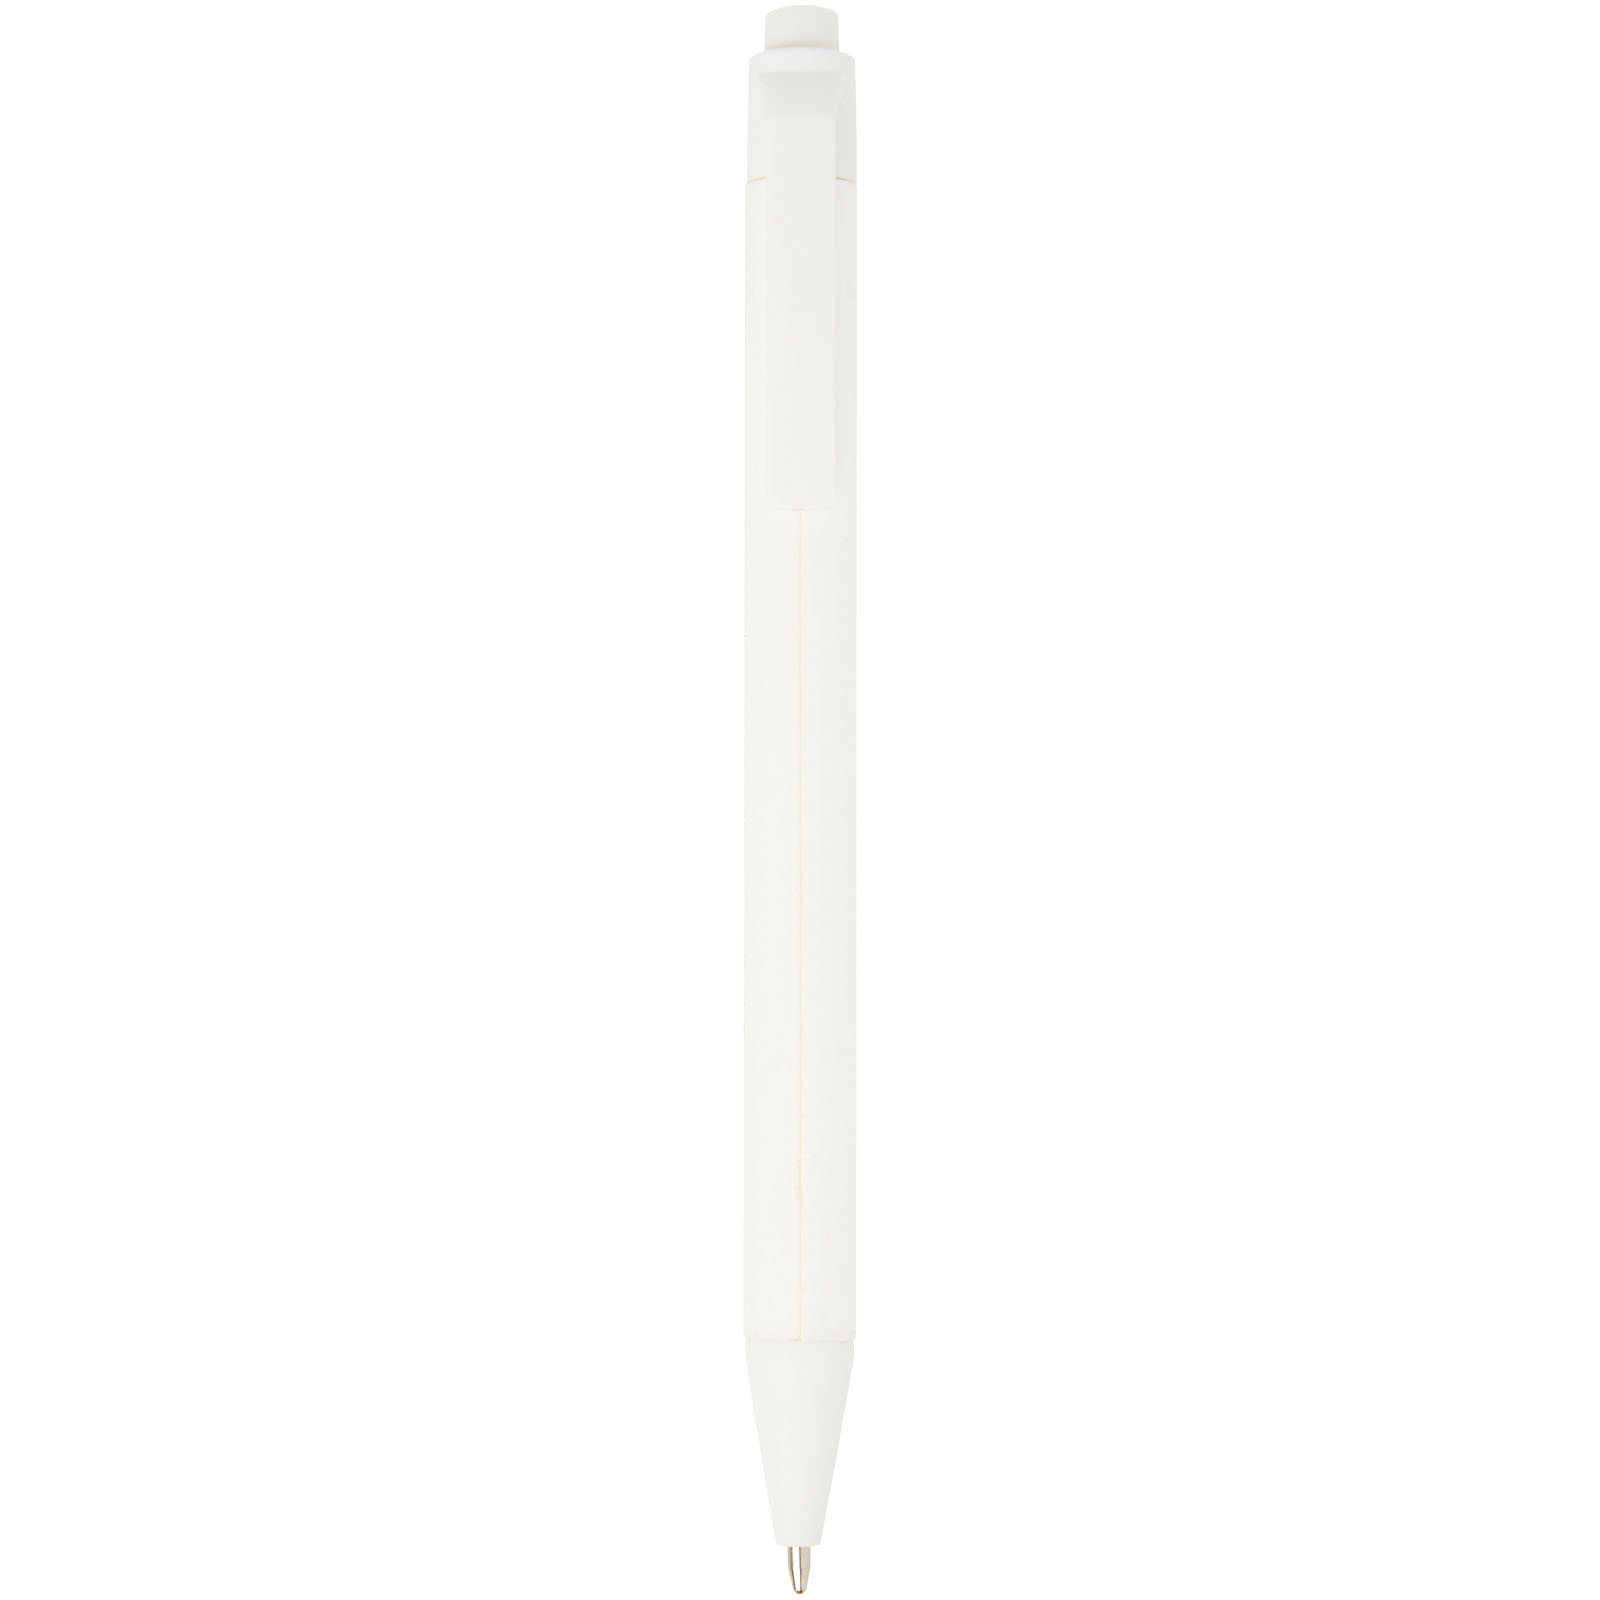 Pens & Writing - Chartik monochromatic recycled paper ballpoint pen with matte finish